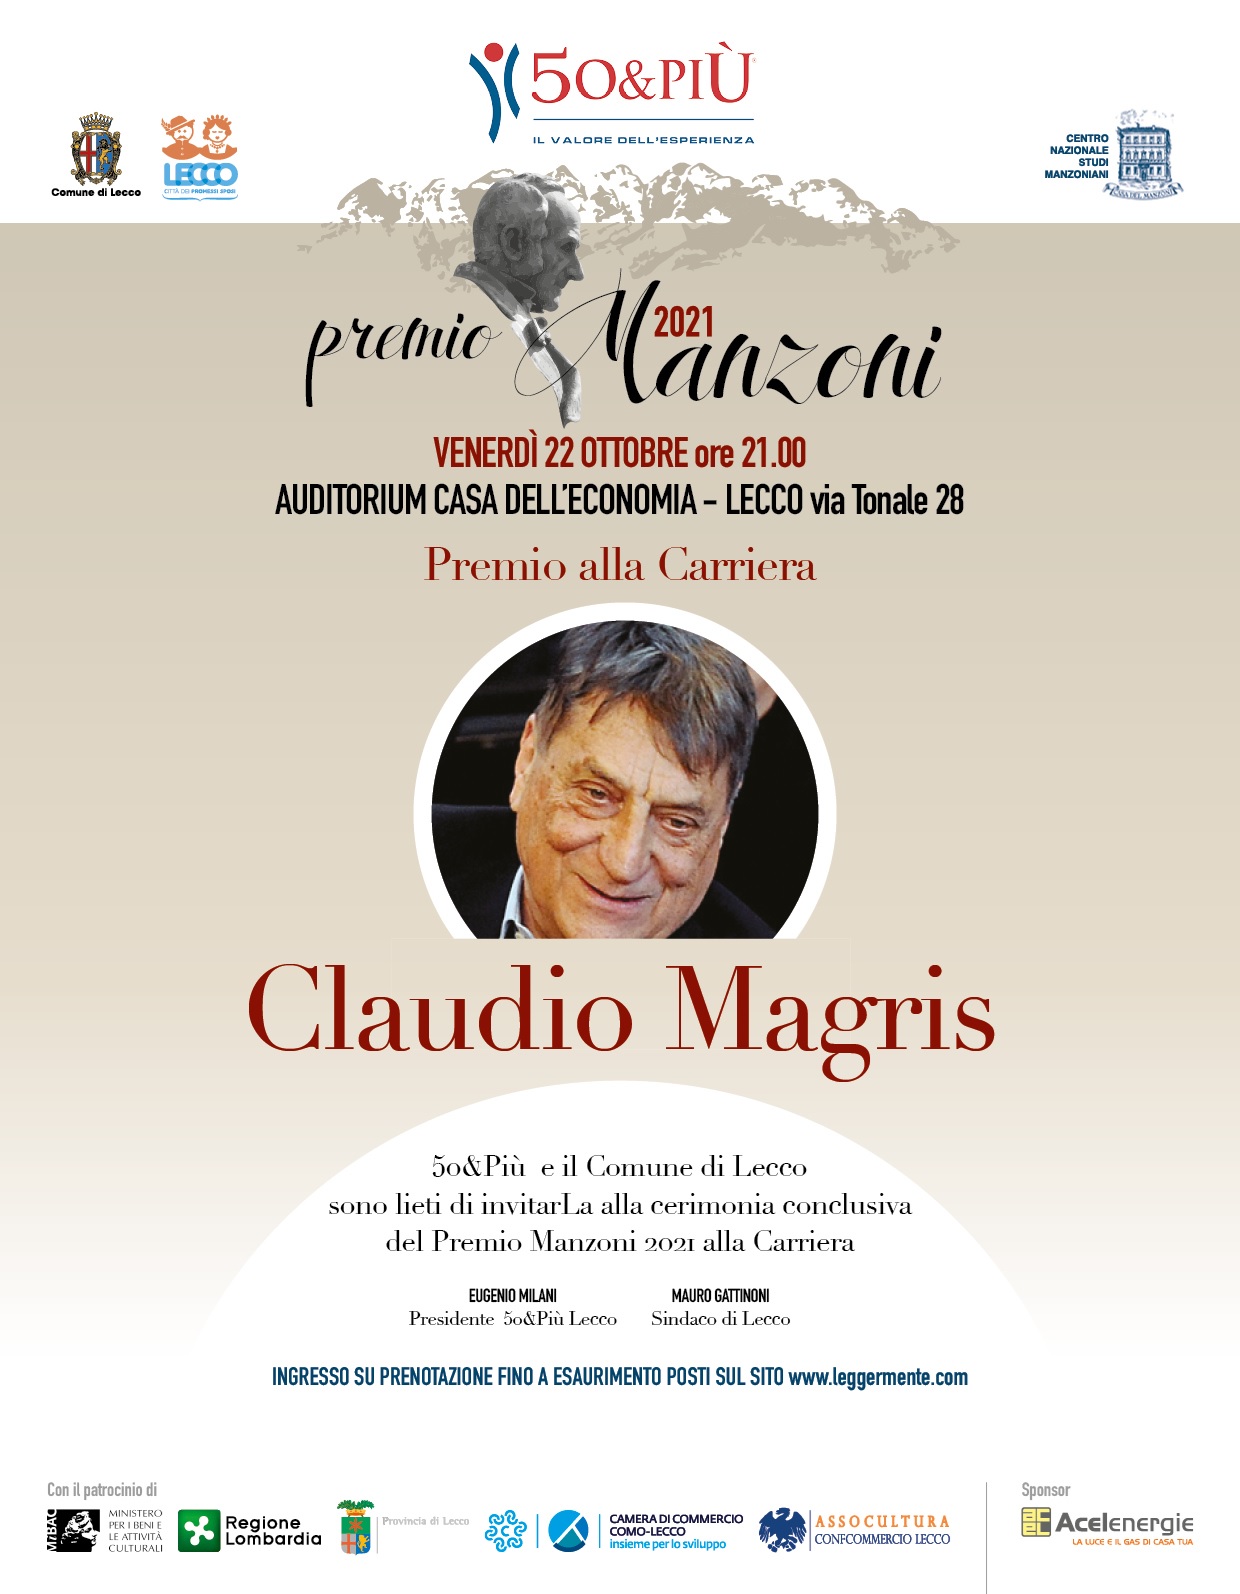 Premio Letterario Manzoni alla Carriera 2021 a Claudio Magris